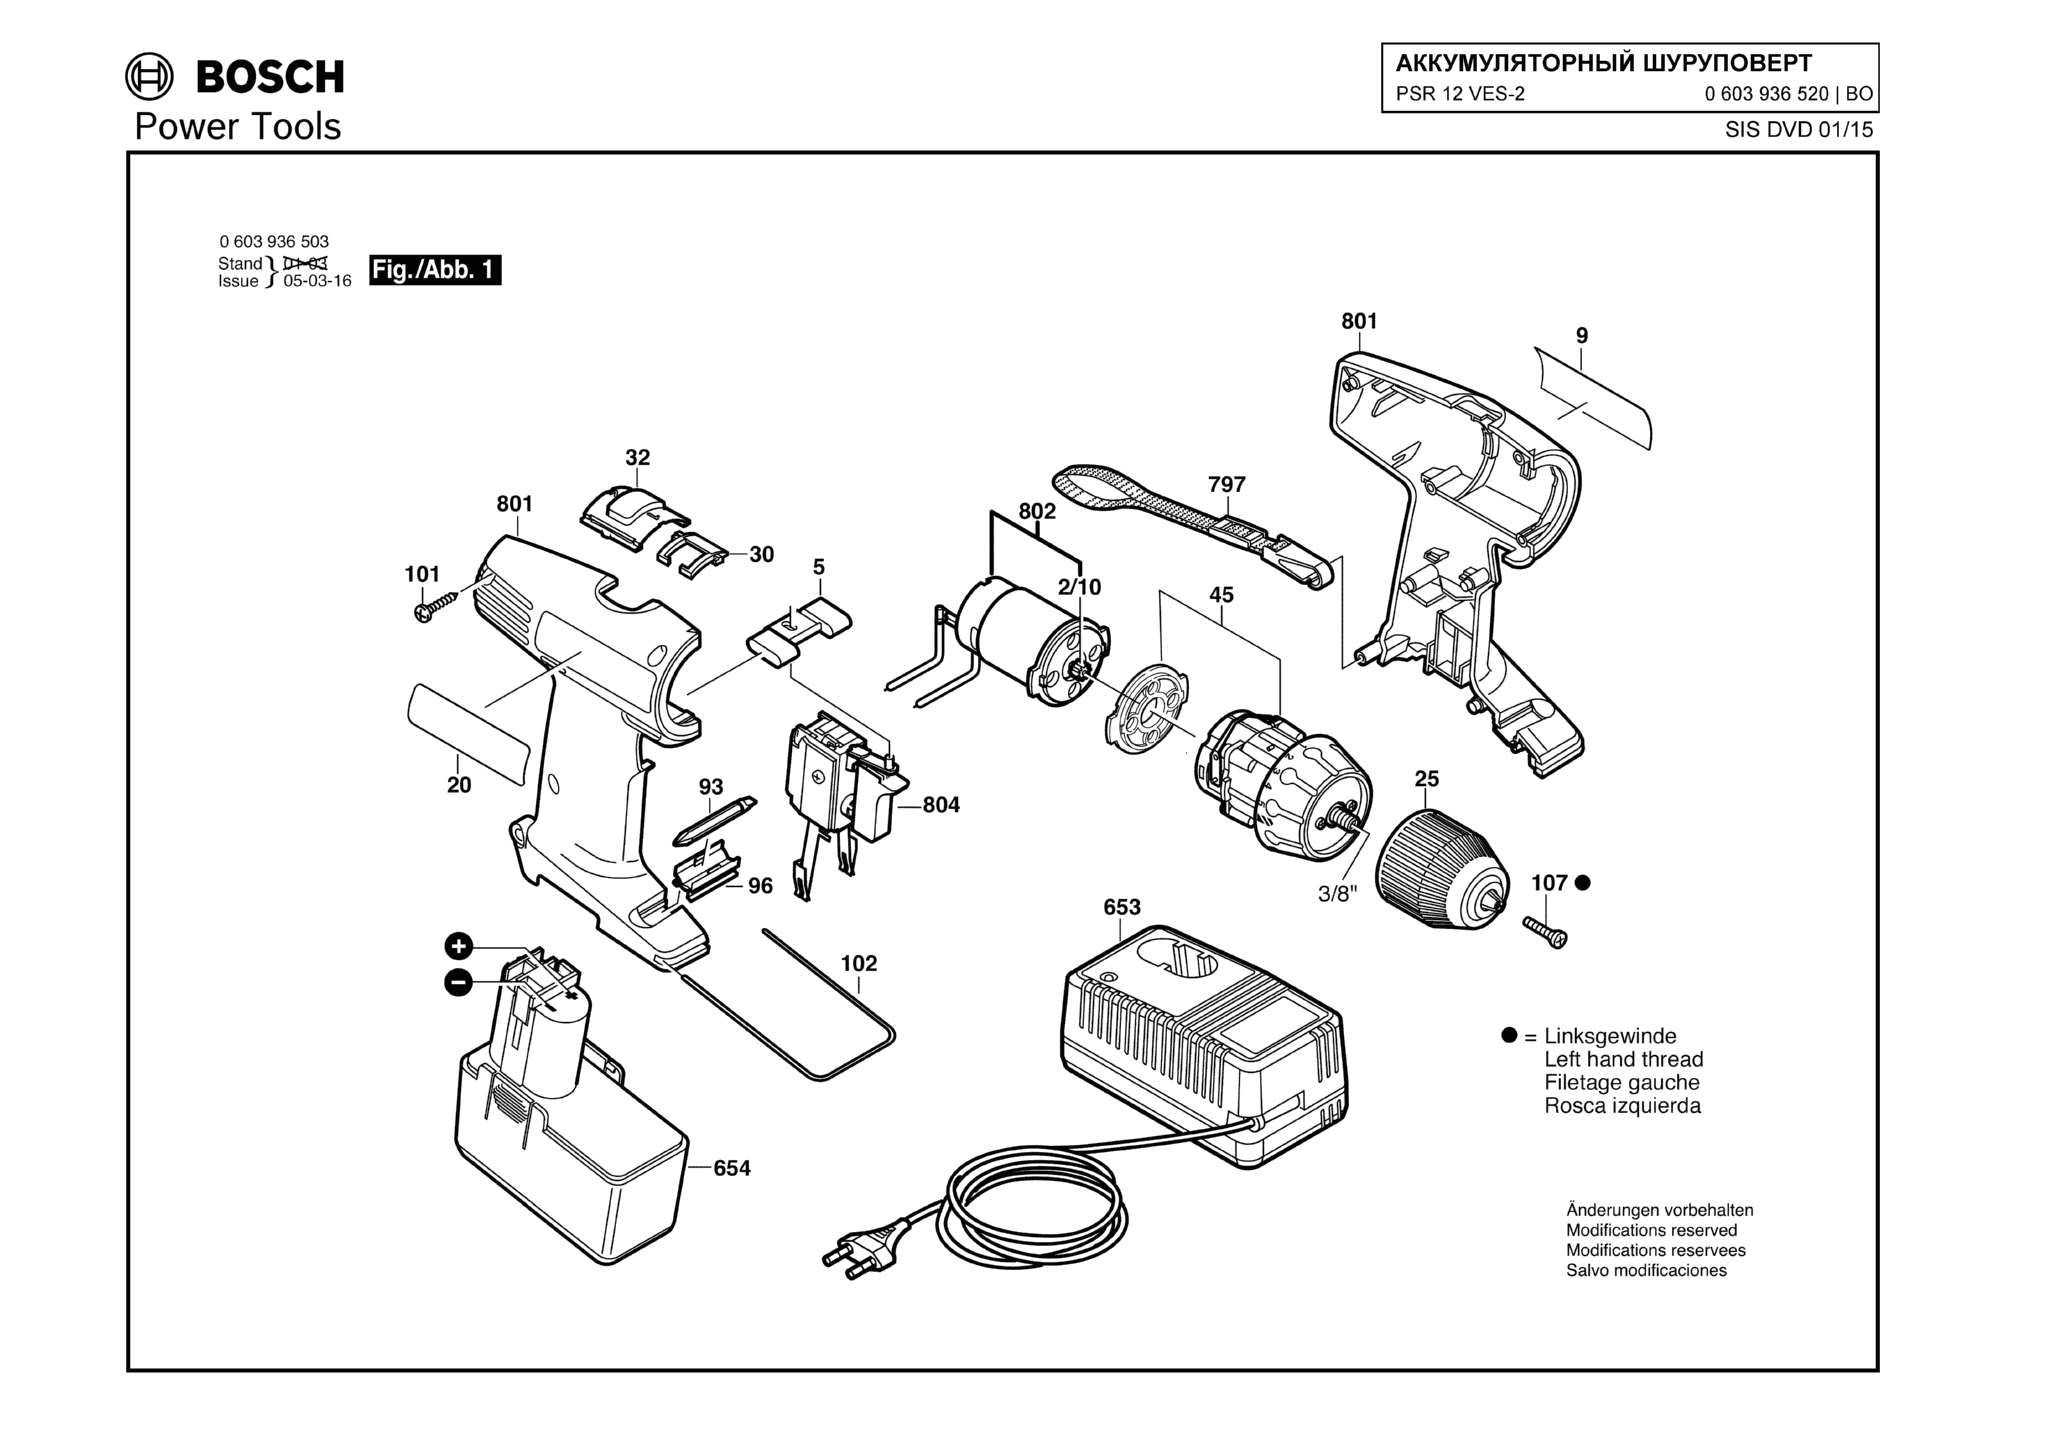 Запчасти, схема и деталировка Bosch PSR 12 VES-2 (ТИП 0603936520)